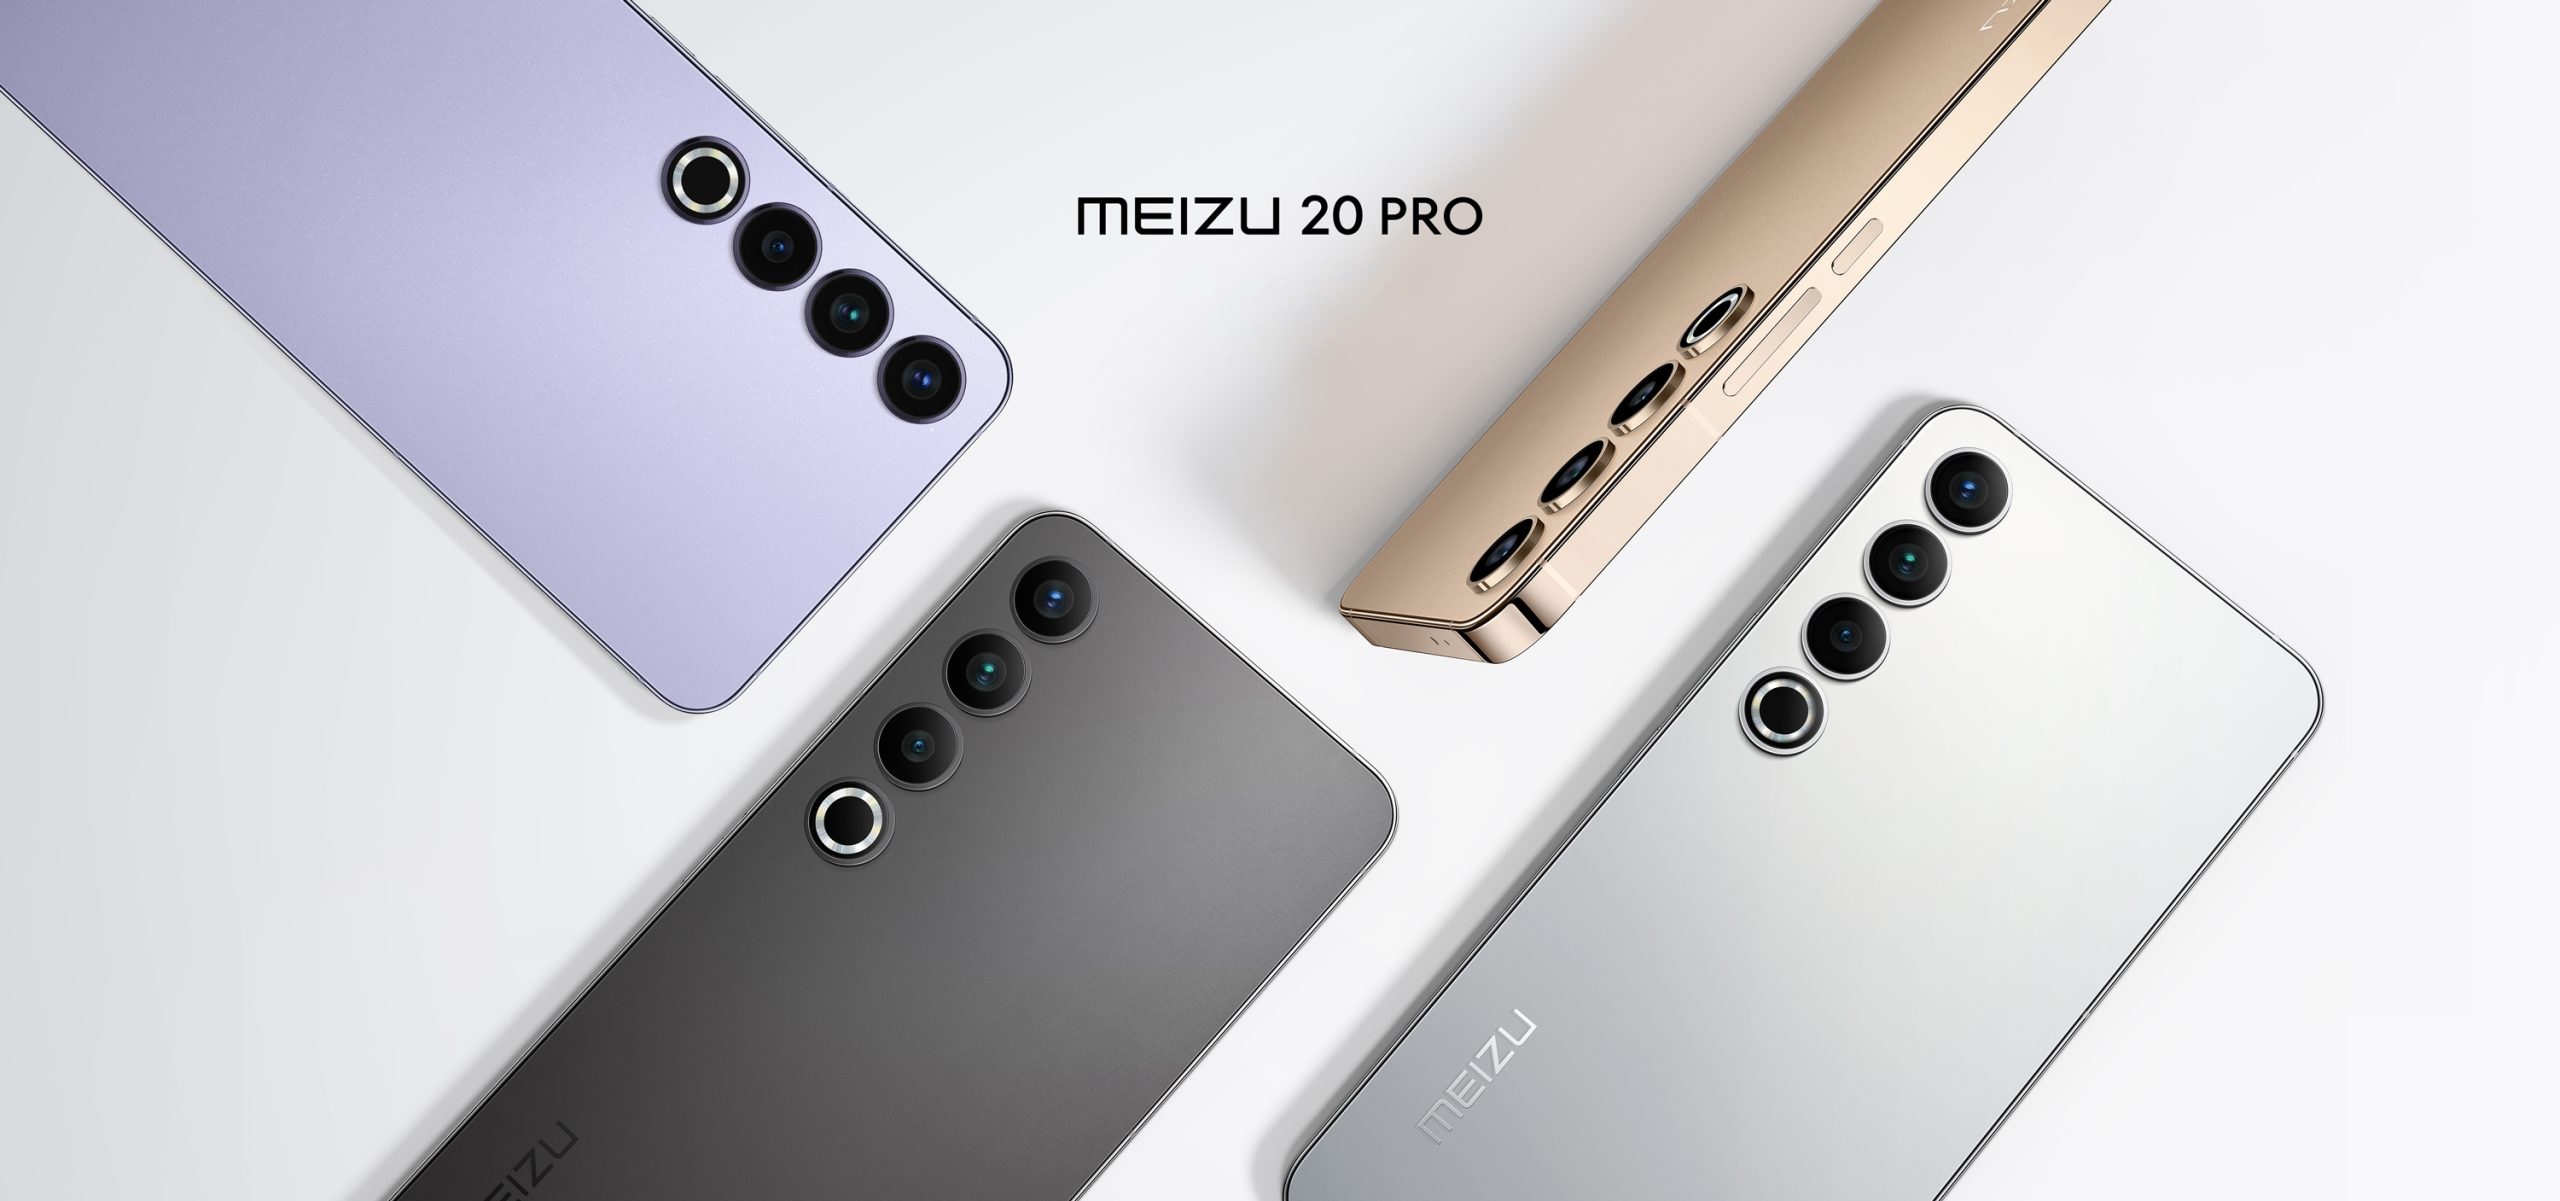 Meizu представила флагман Meizu 20 Pro у новому кольорі Sunrise Purple